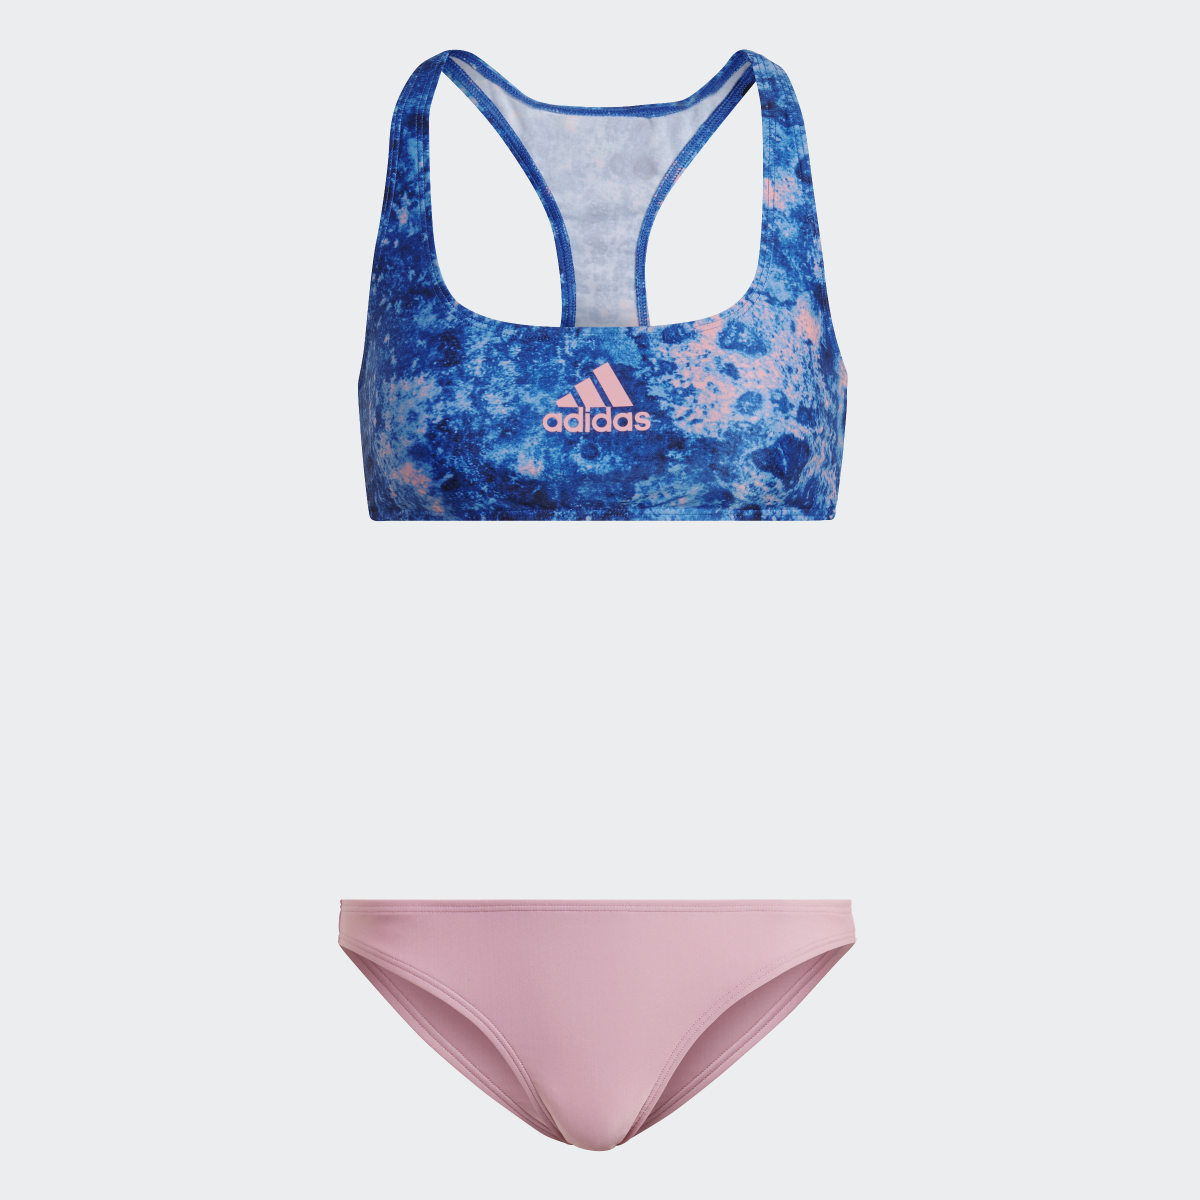 Adidas Melting Salt Bikini Set. 5